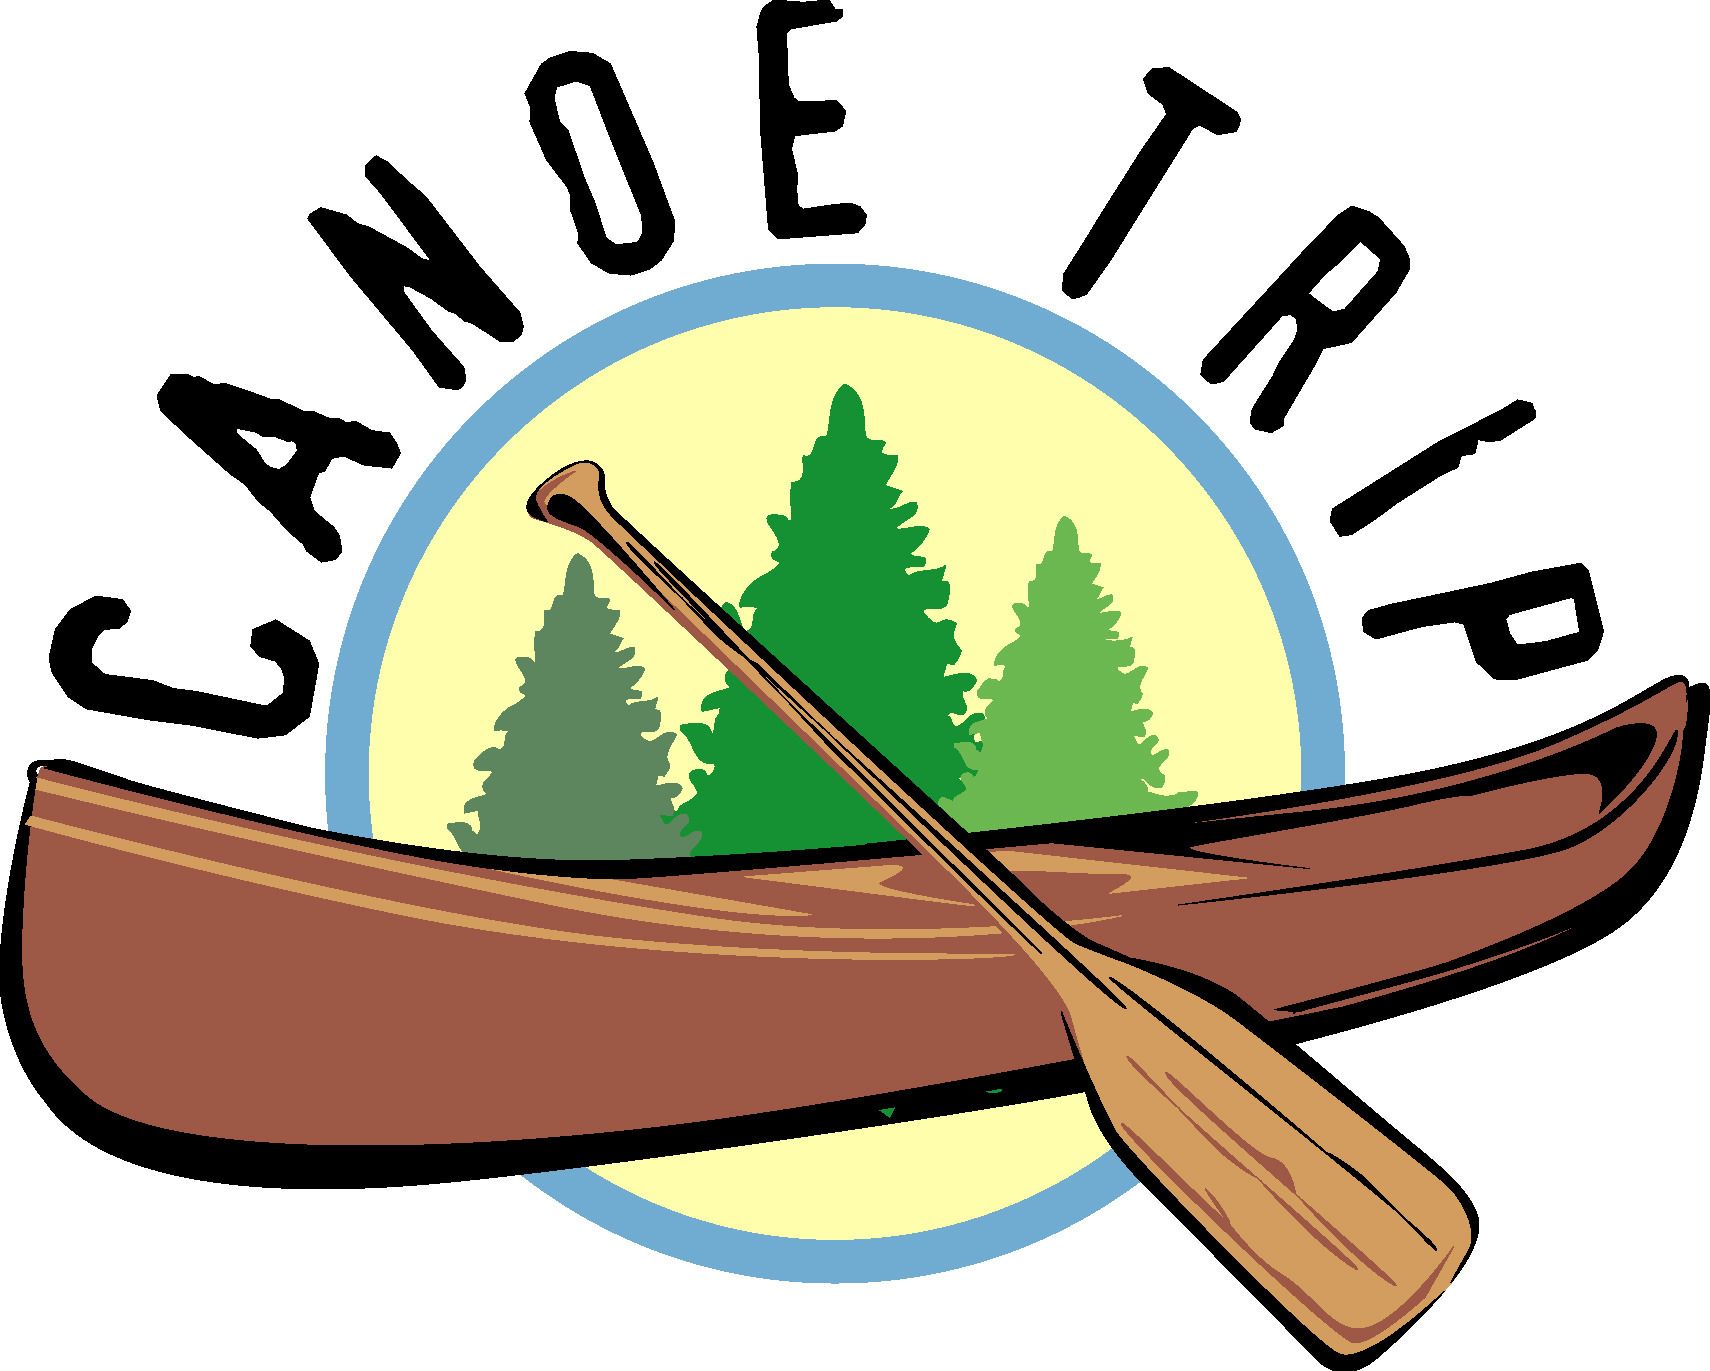 canoe clipart camp canoe